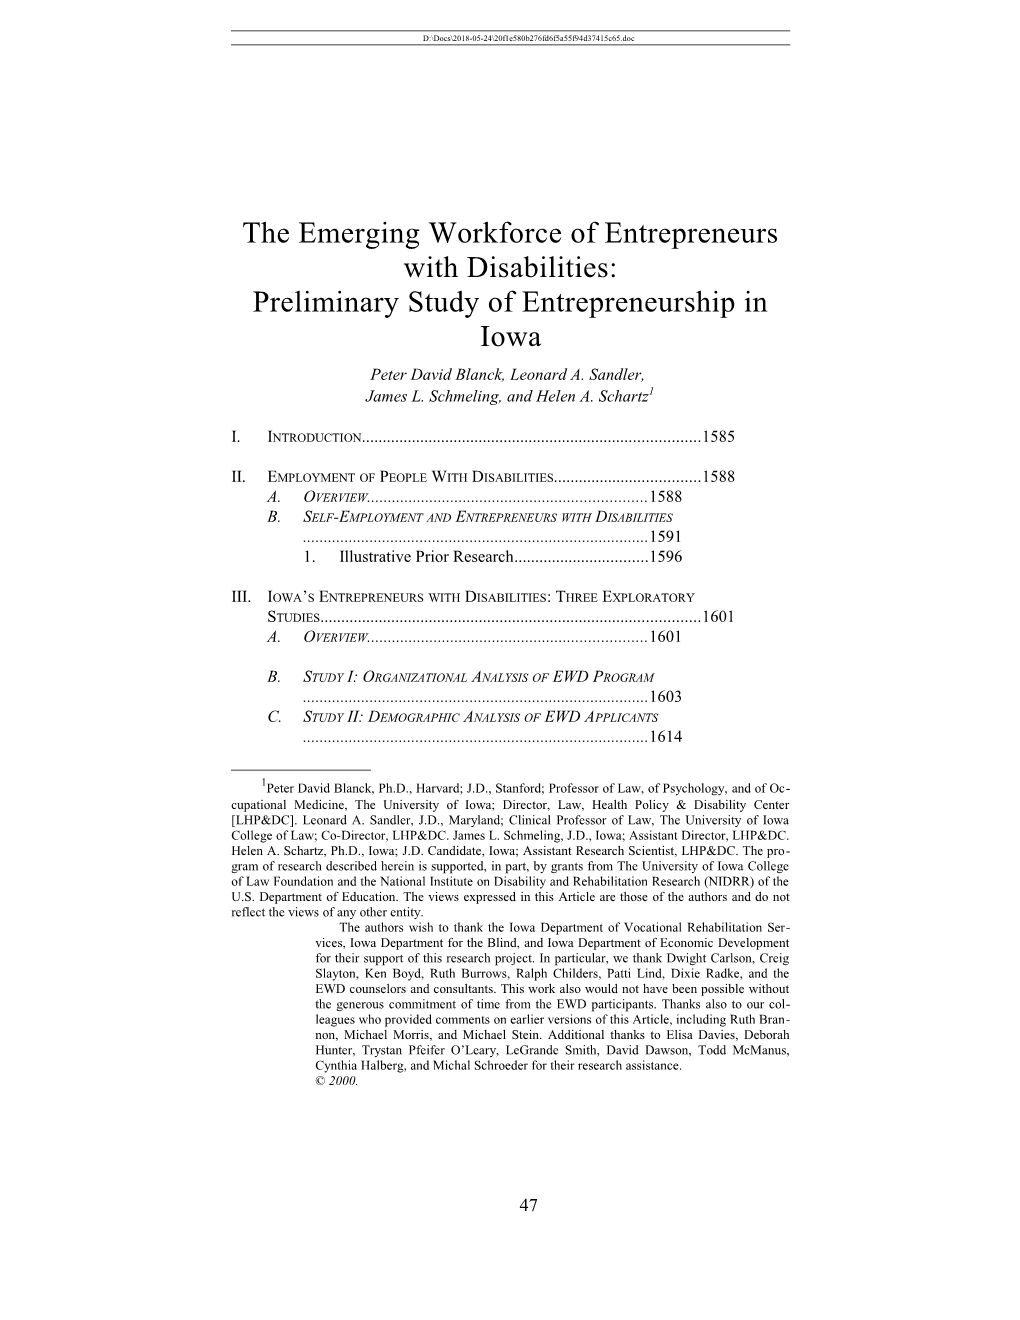 Entrepreneurship in Iowa